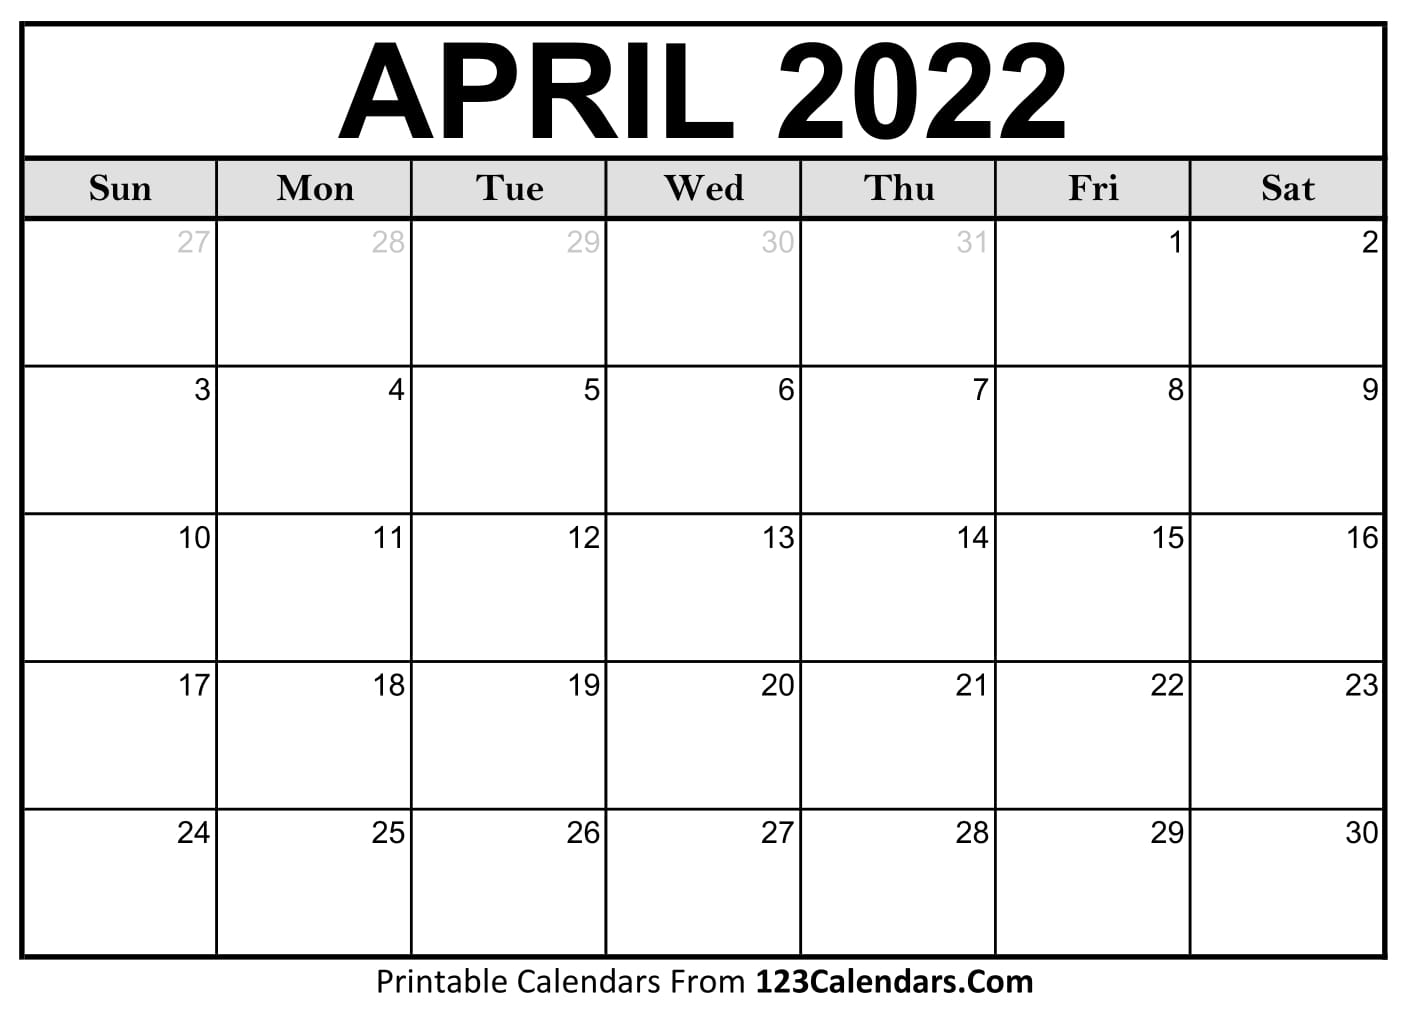 Printable Calendar 2022 April Printable April 2022 Calendar Templates - 123Calendars.com